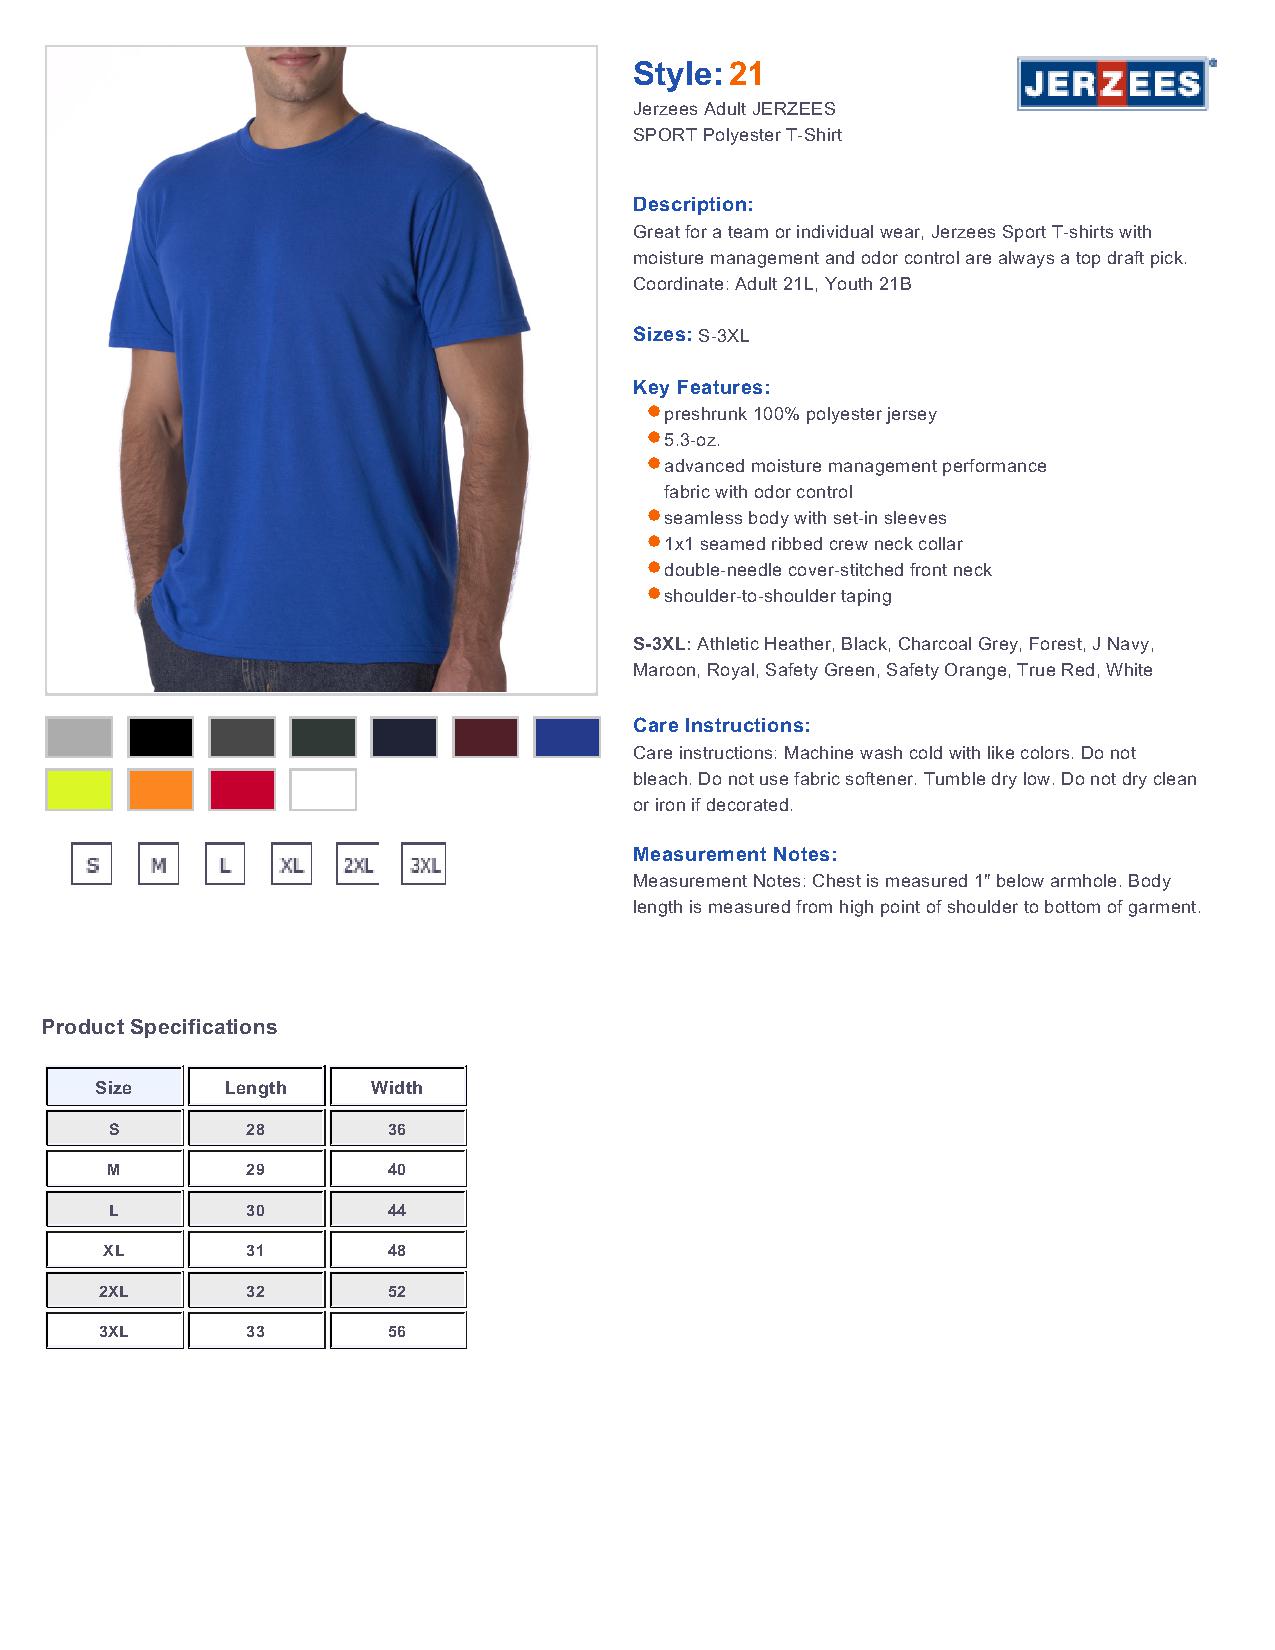 Jerzees 21 - Adult JERZEES SPORT Polyester T-Shirt $4.48 - Men's T-Shirts